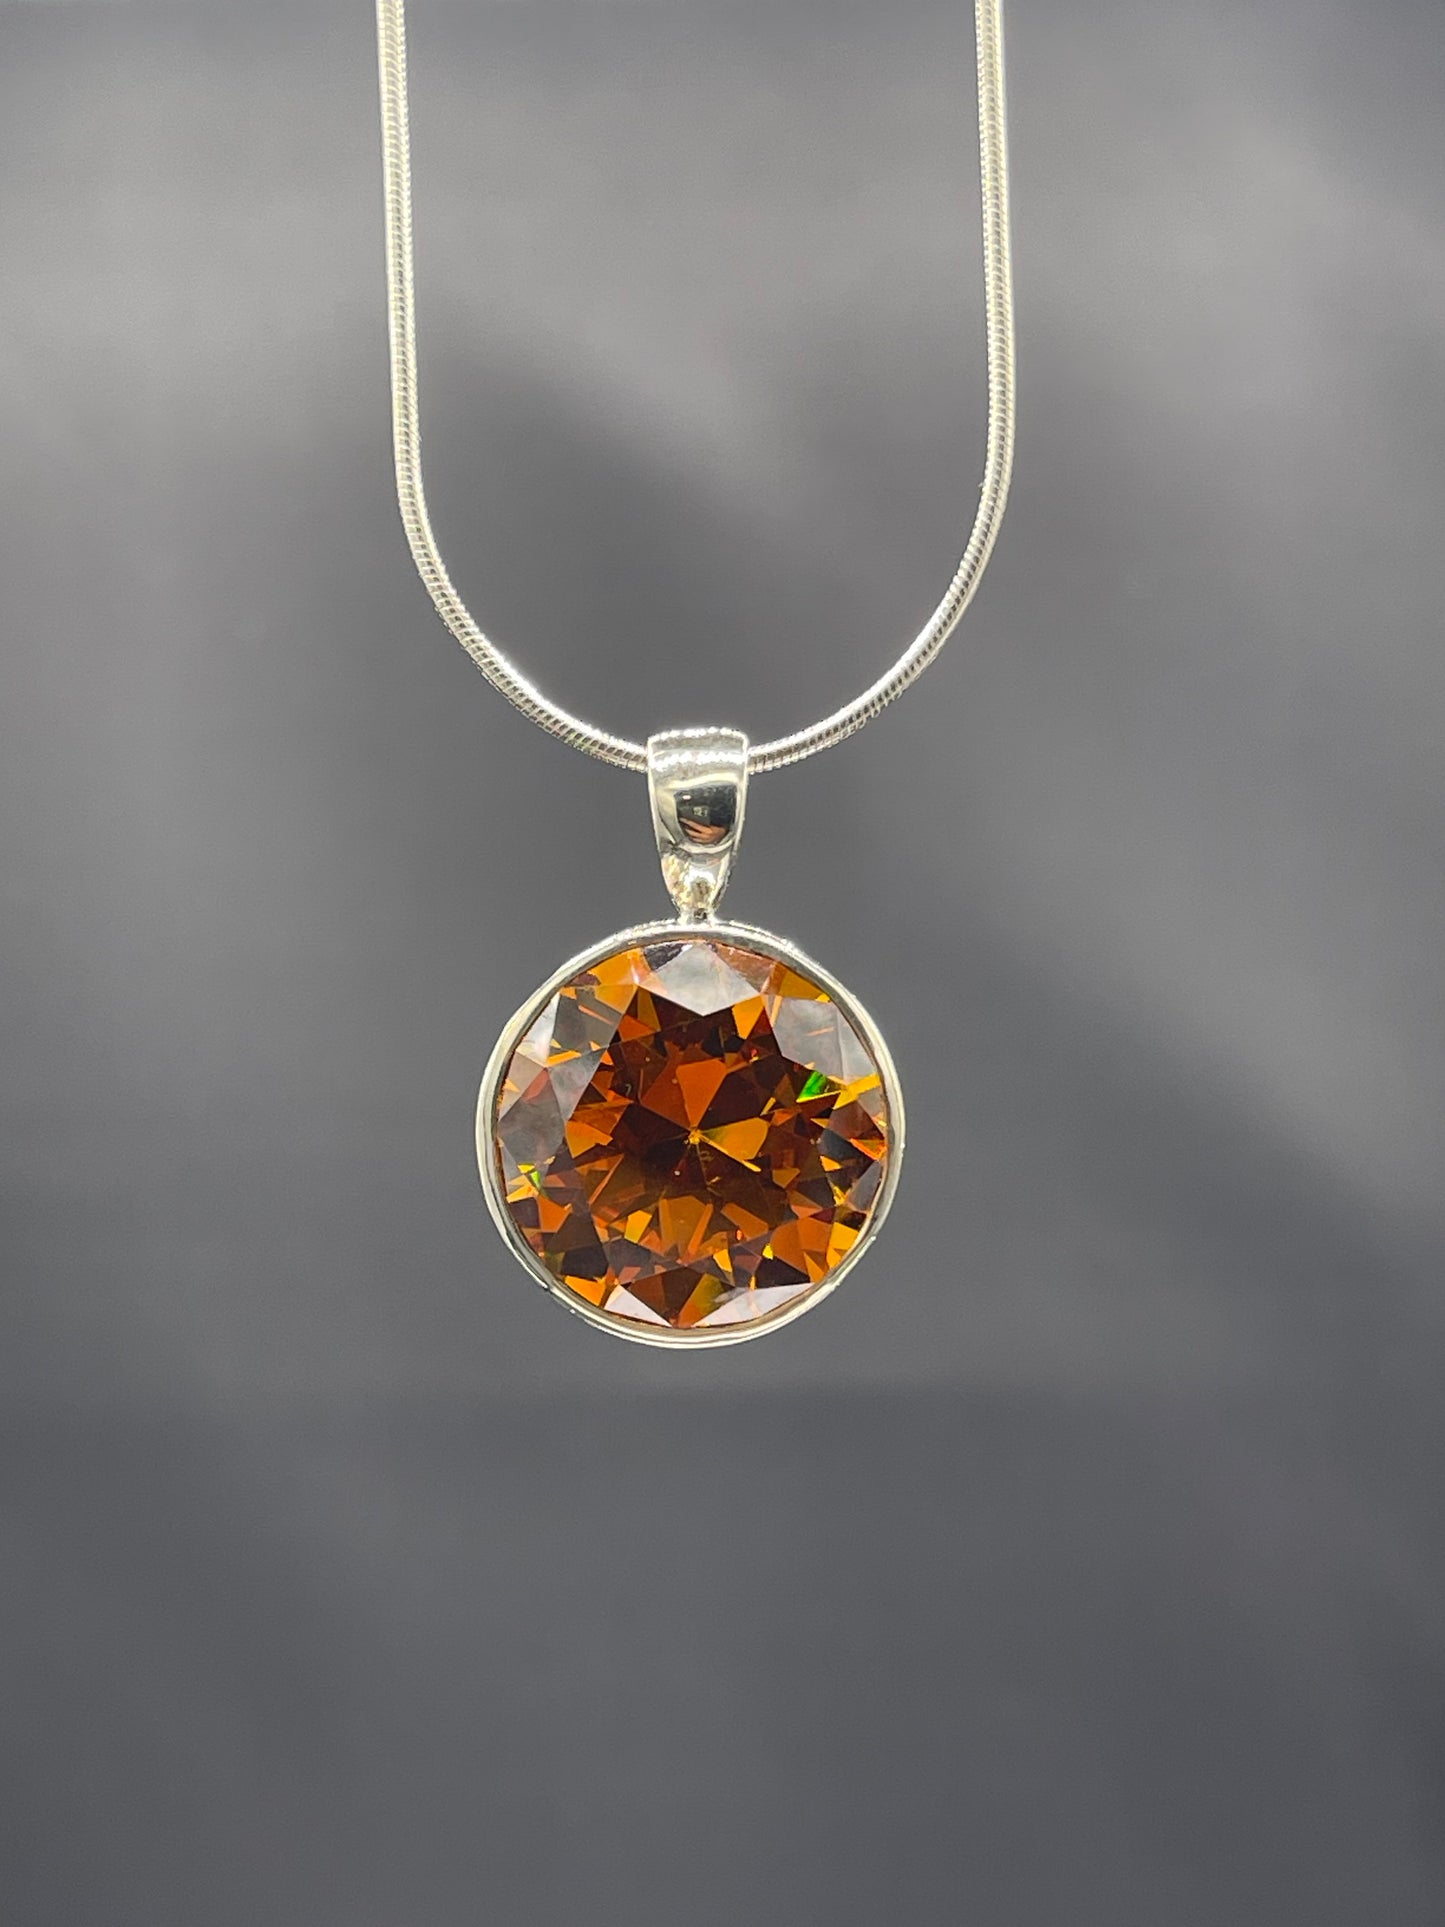 Stunning 50 Carat Orange Cubic Zirconia Pendant Sterling Silver Pendant & Necklace